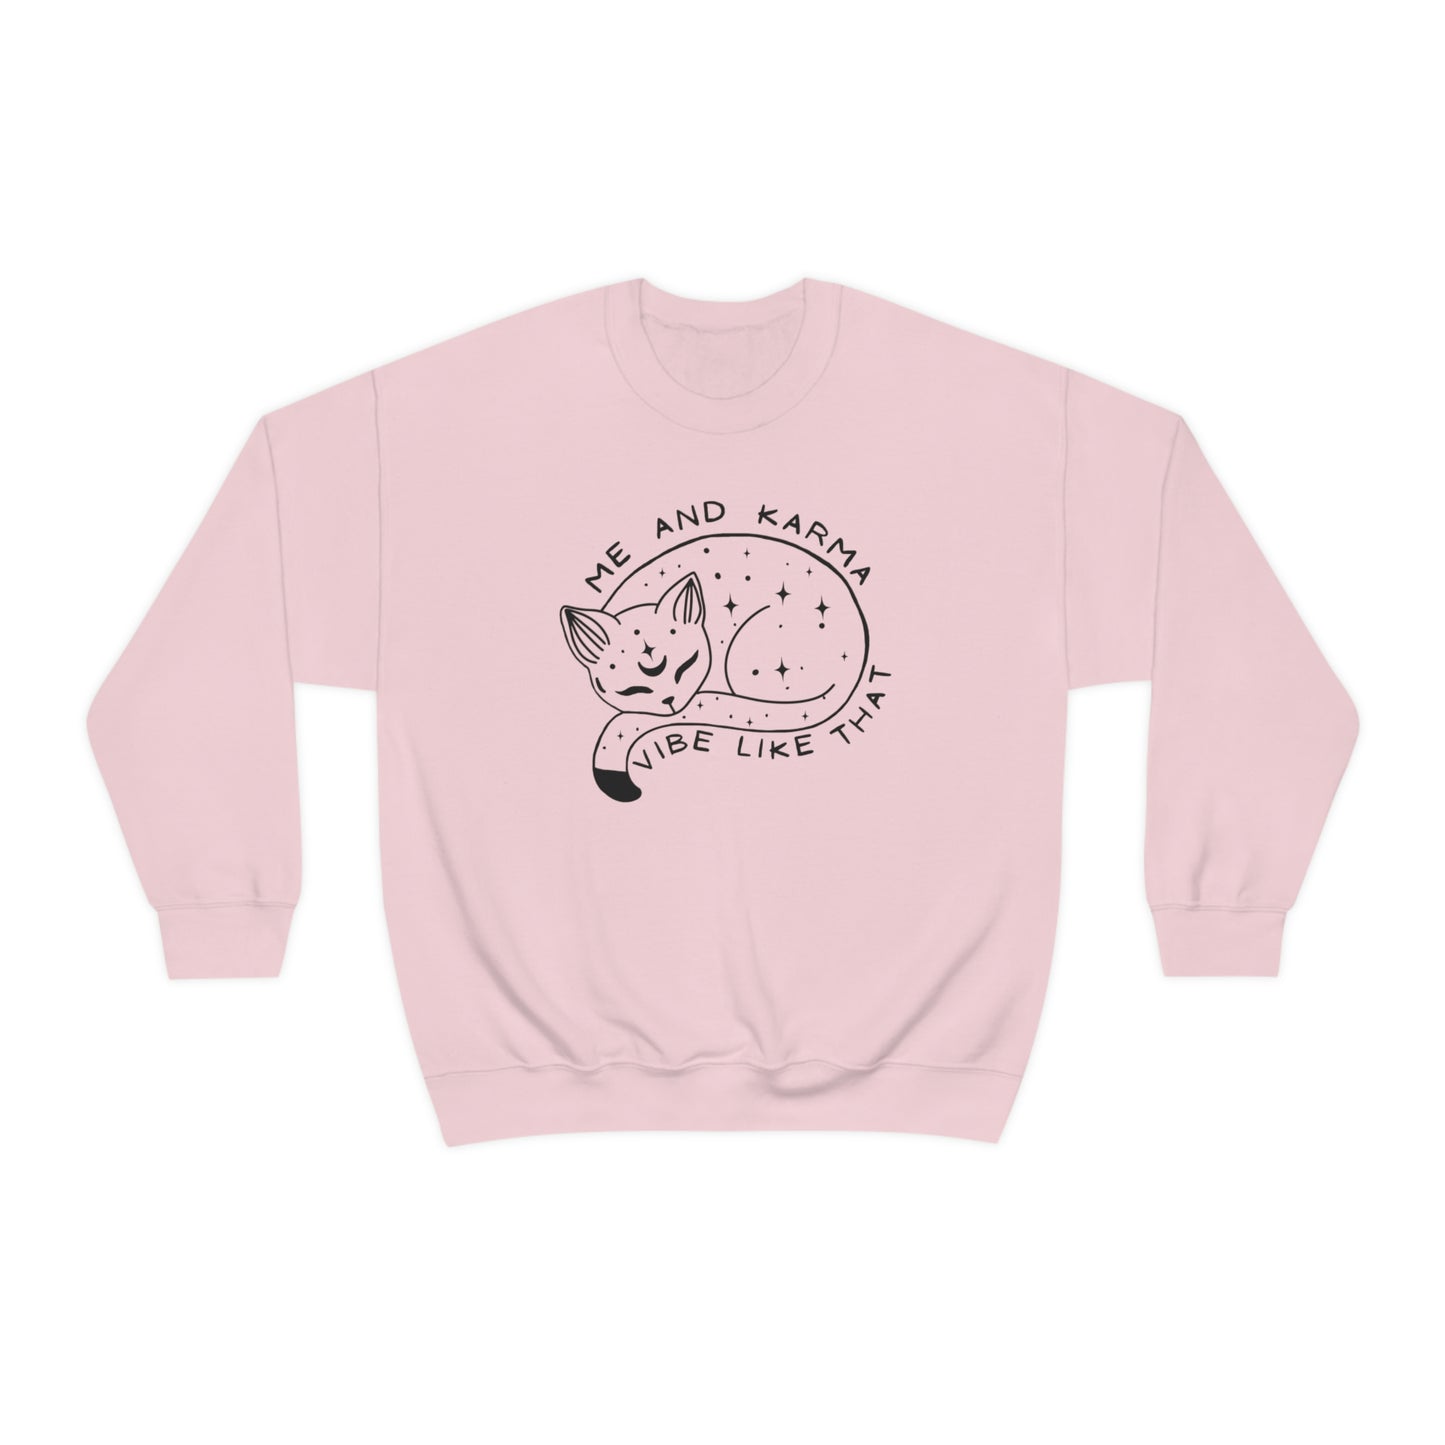 Karma Vibe Like That Cat Sweatshirt